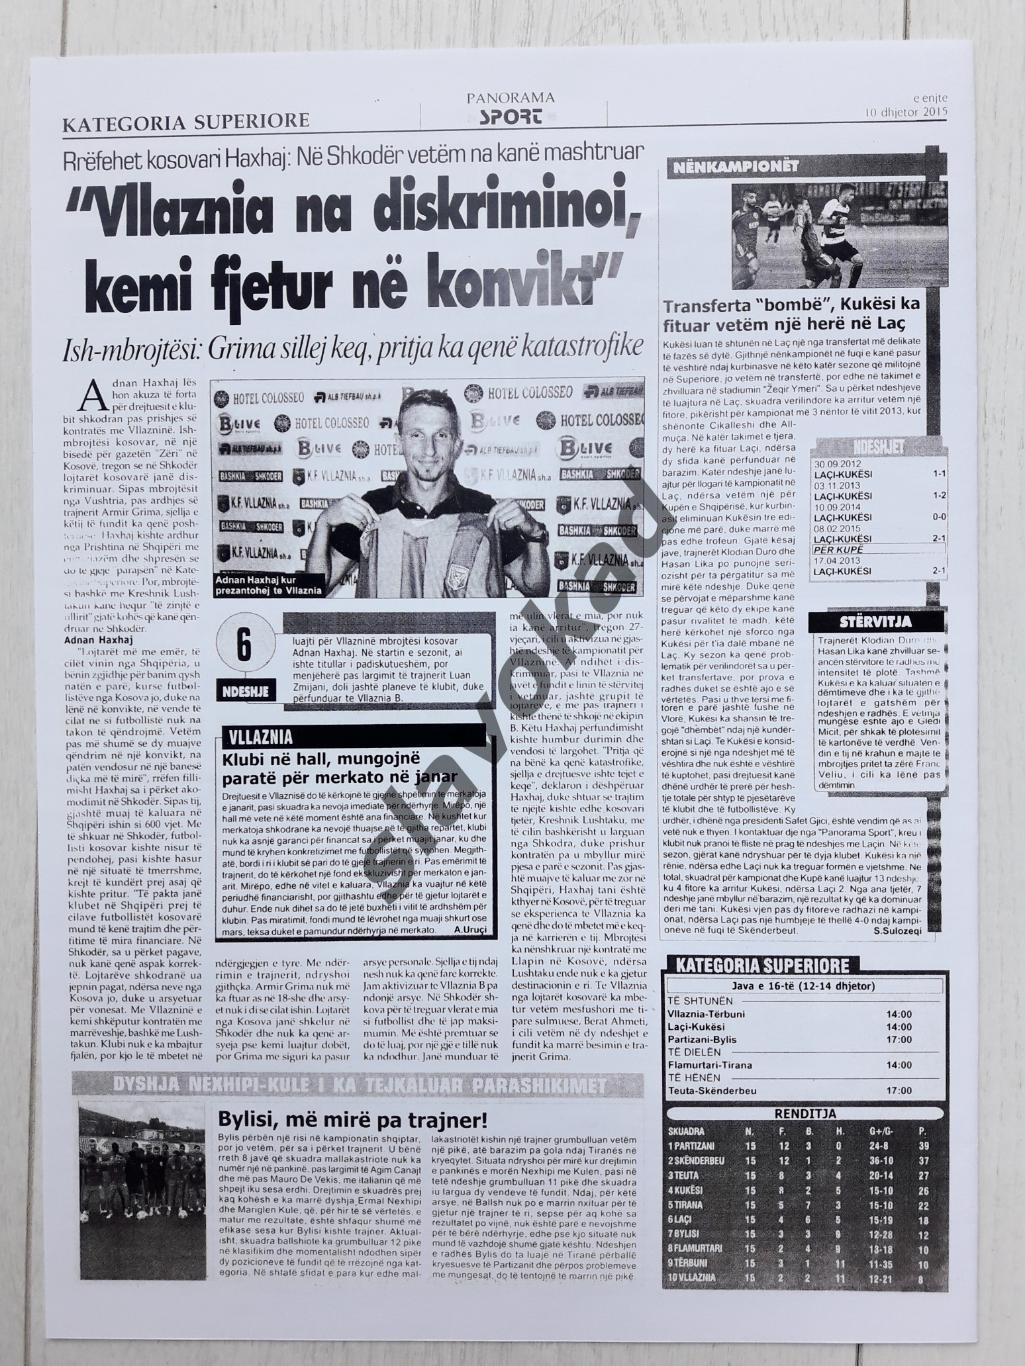 Локомотив Москва - Скендербеу Албания 10.12.2015 - издание PANORAMA SPORT 3